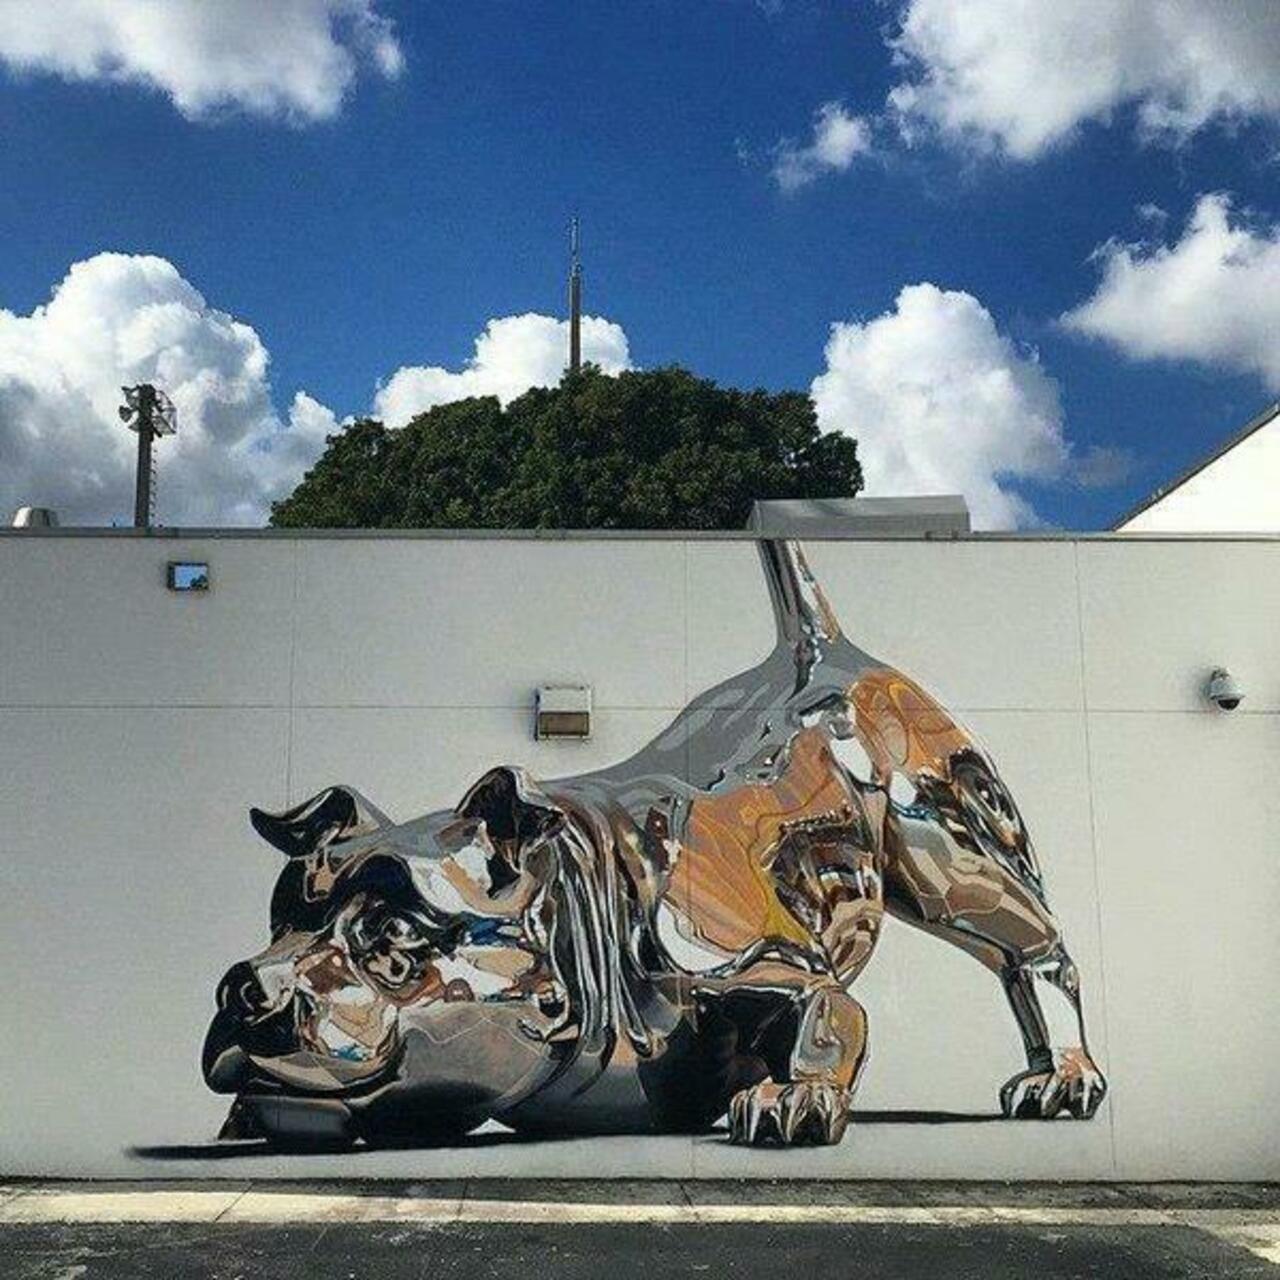 RT @ilusion0ptica: Artista: Bik Ismo 
Miami, EE.UU. 
#art #streetart #mural #graffiti http://t.co/Vlh2Q4S3e3